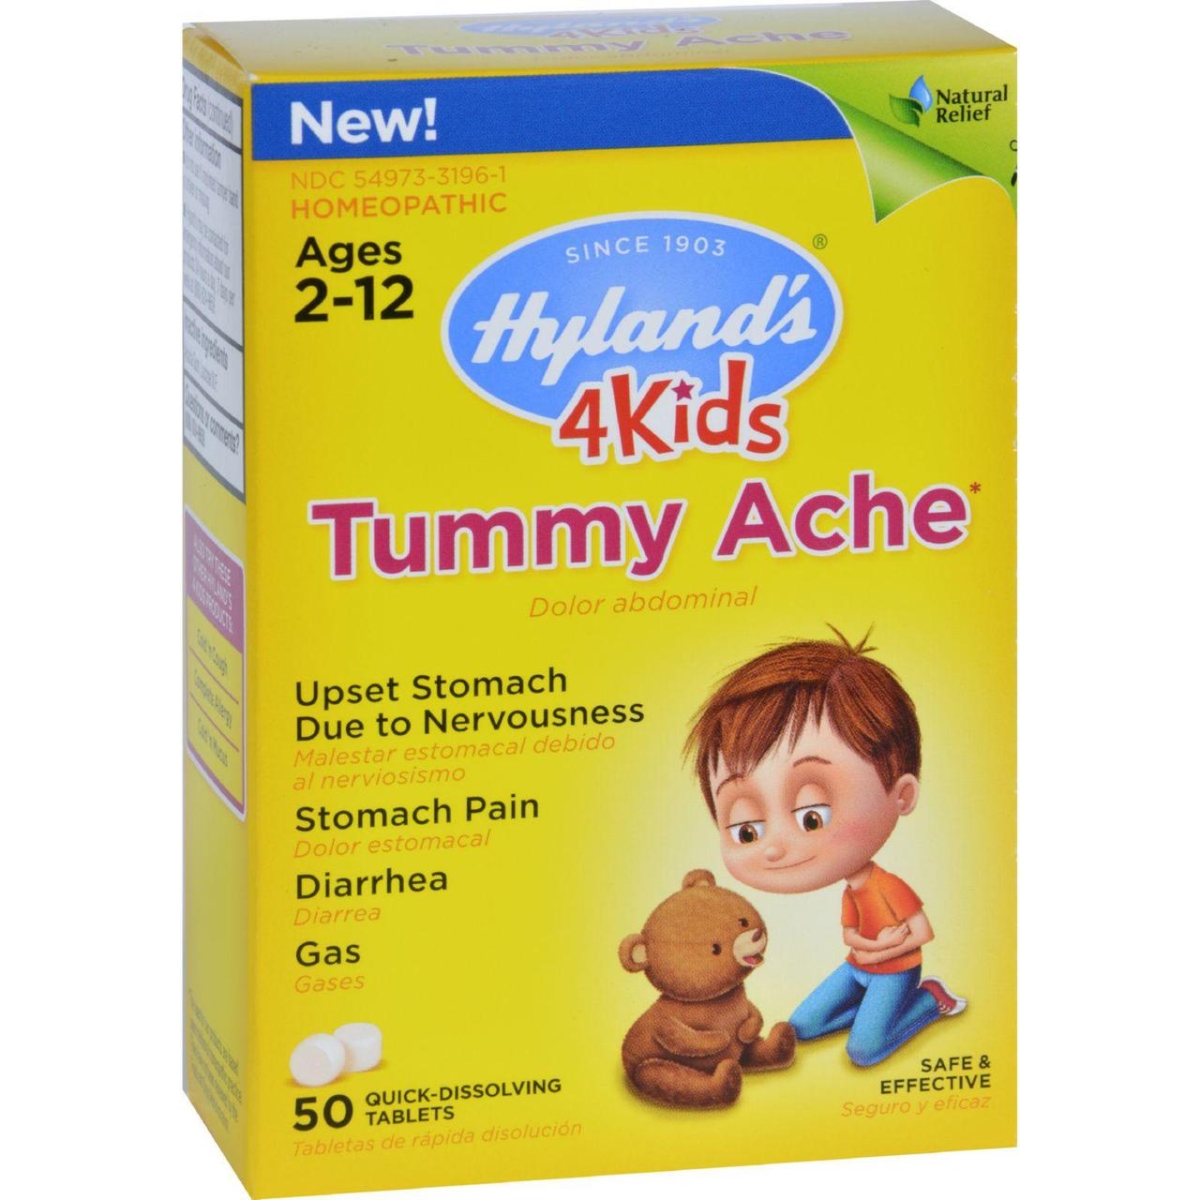 Hg1637347 Homeopathic Tummy Ache, 4 Kids - 50 Quick-dissolving Tablets